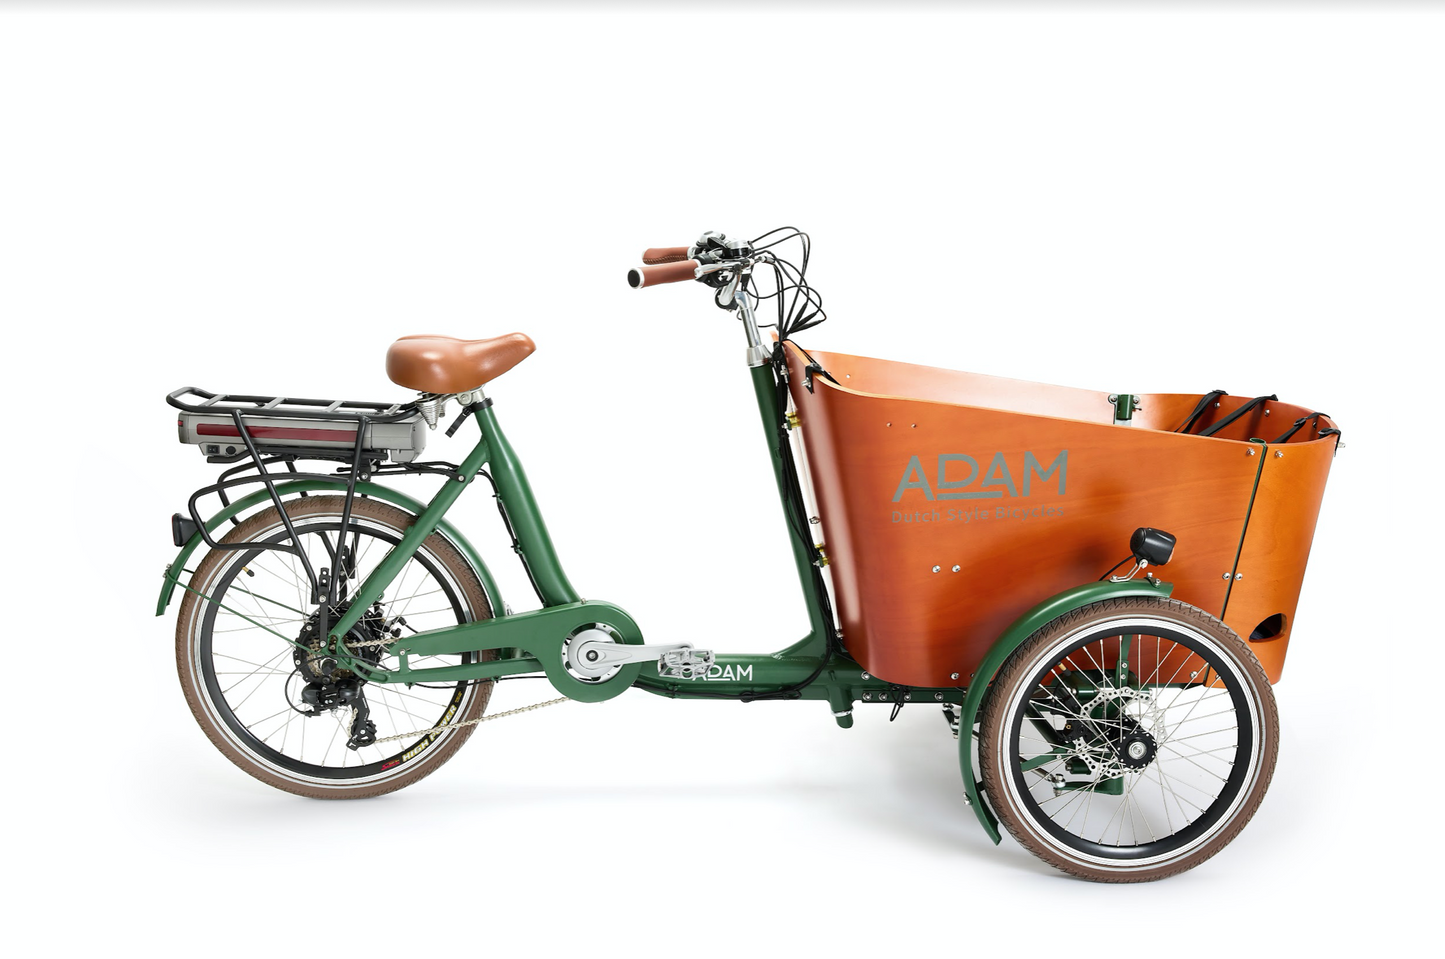 The Cargo Adam Electric - Dutch Cargo Bicycle